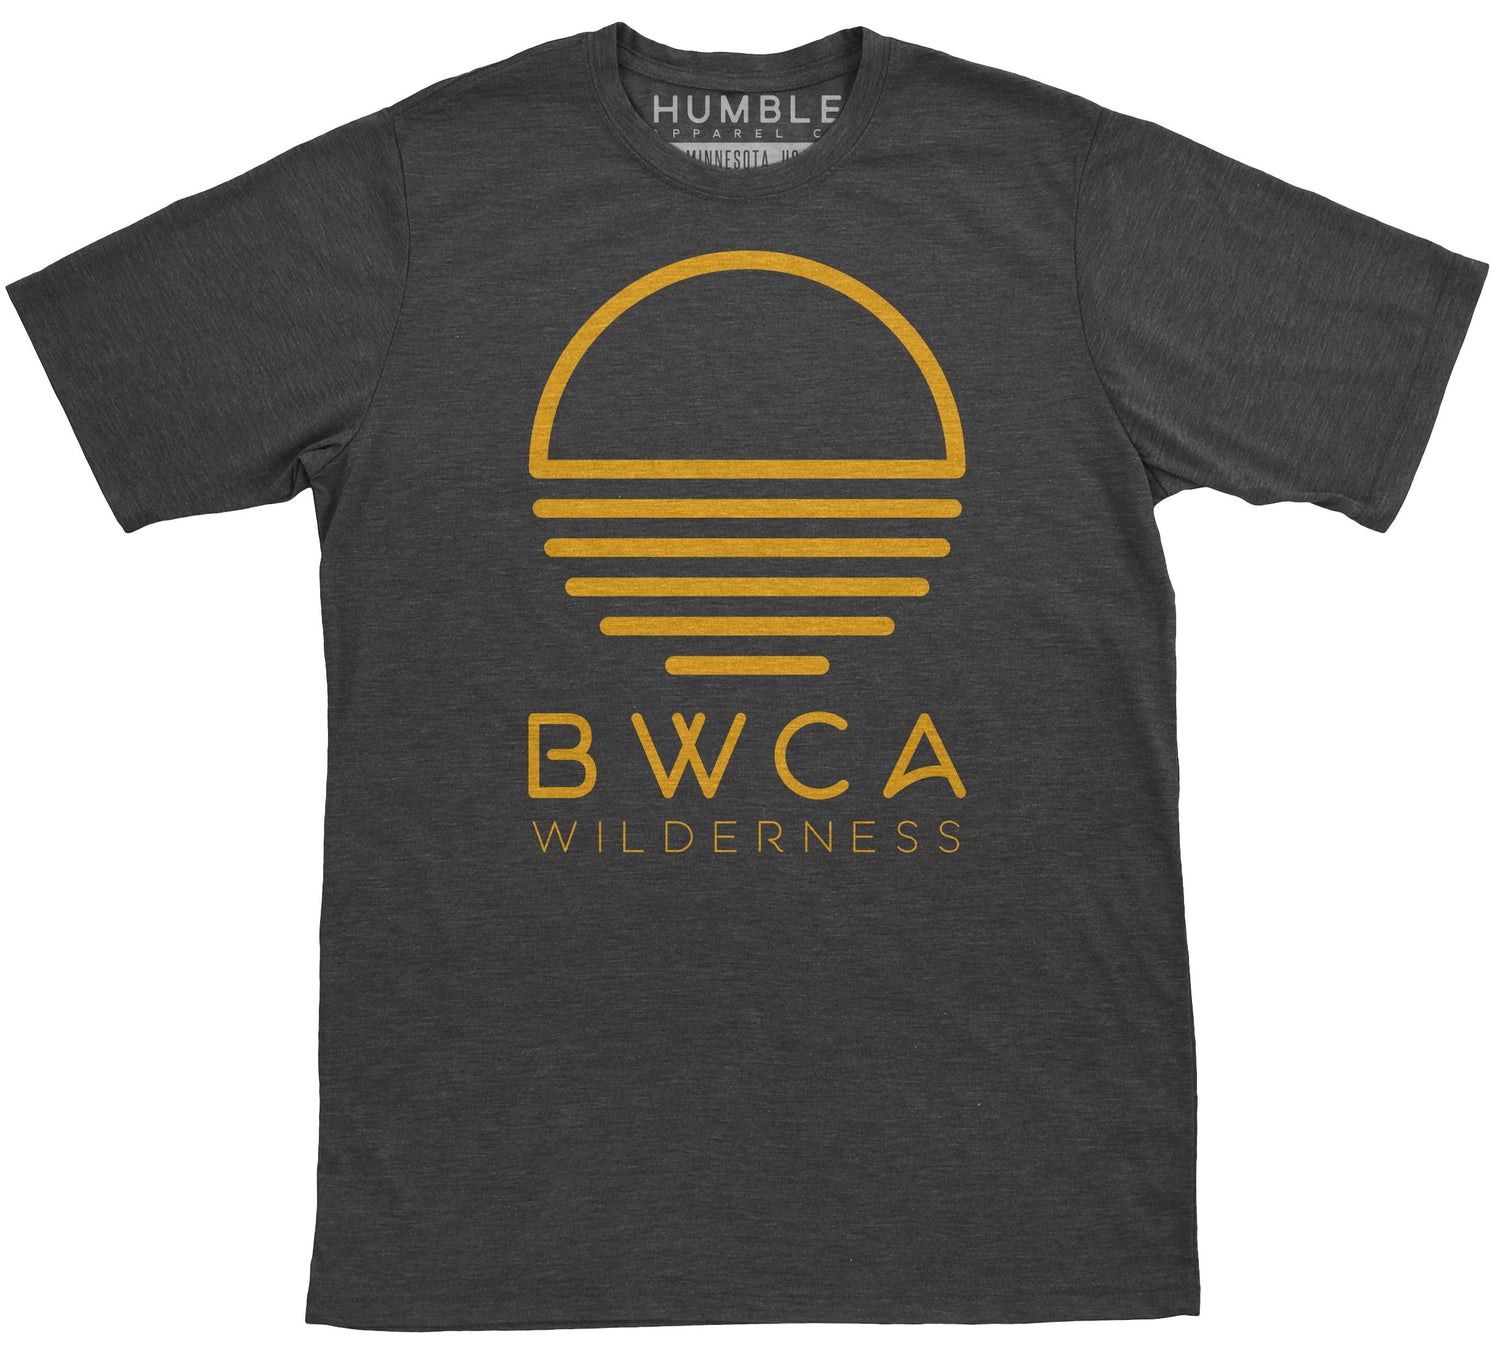 BWCA Sunset Wilderness T-Shirt - Charcoal - Humble Apparel Co 